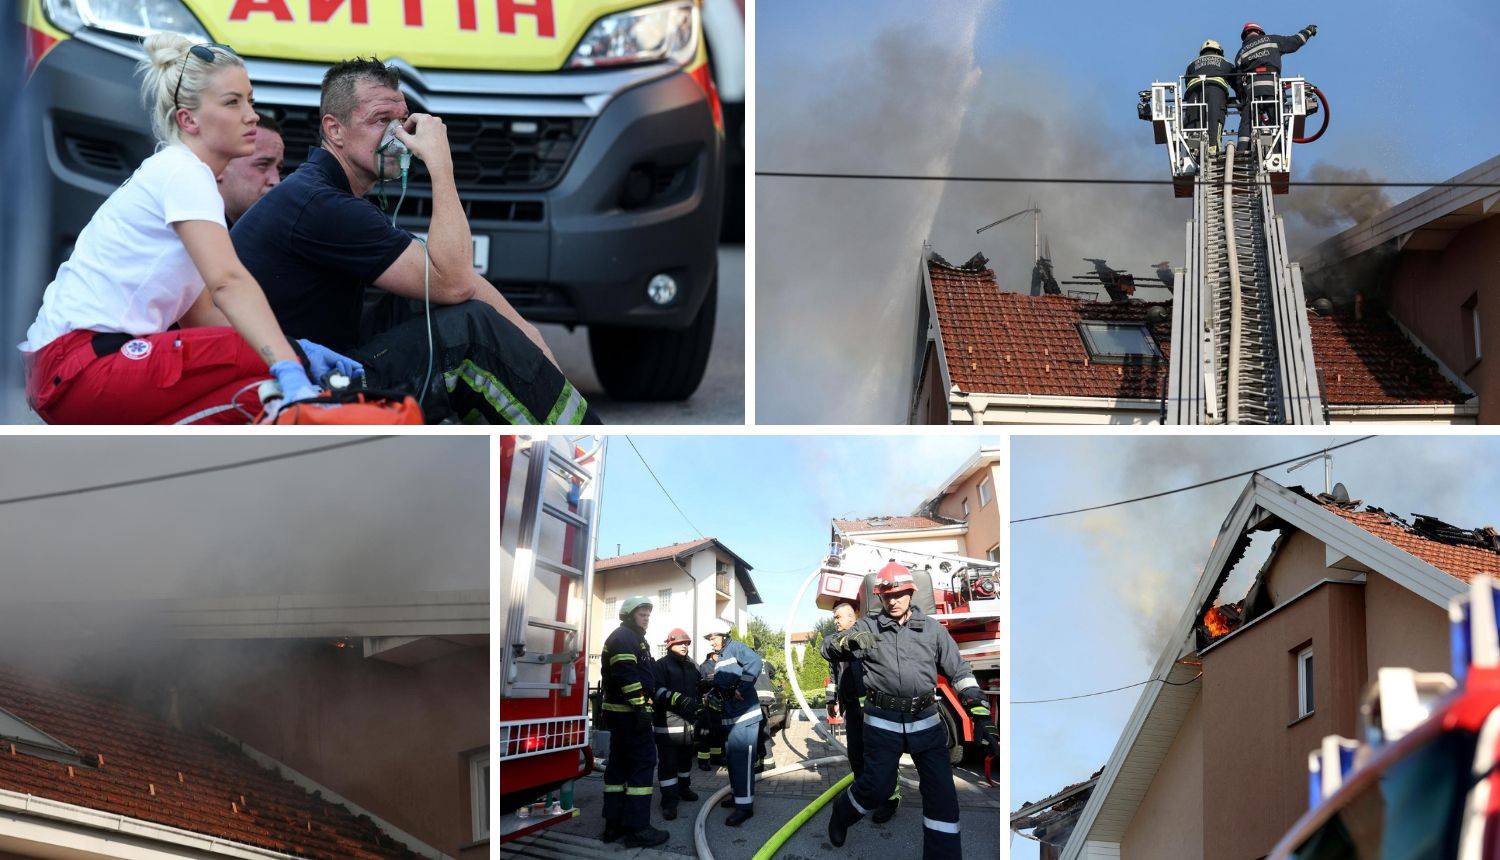 Preminuo je mladi vatrogasac: 'Čuli smo čak četiri eksplozije'